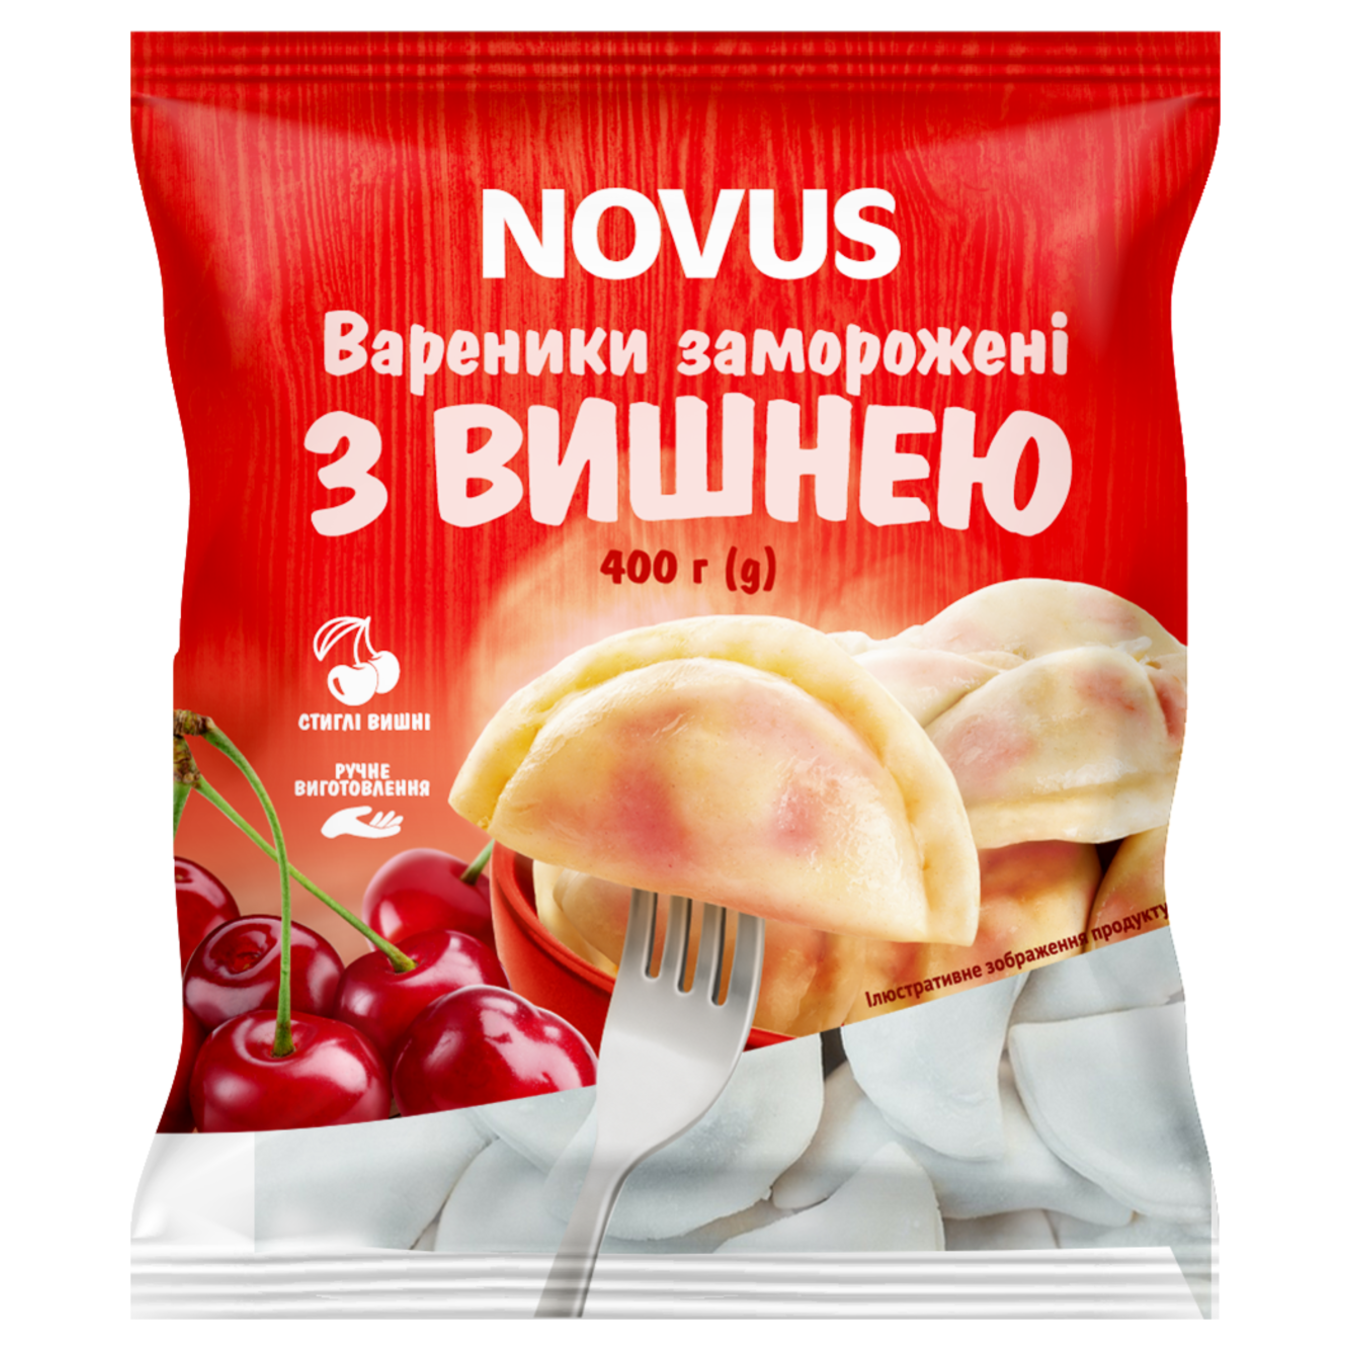 NOVUS dumplings with cherry 400g